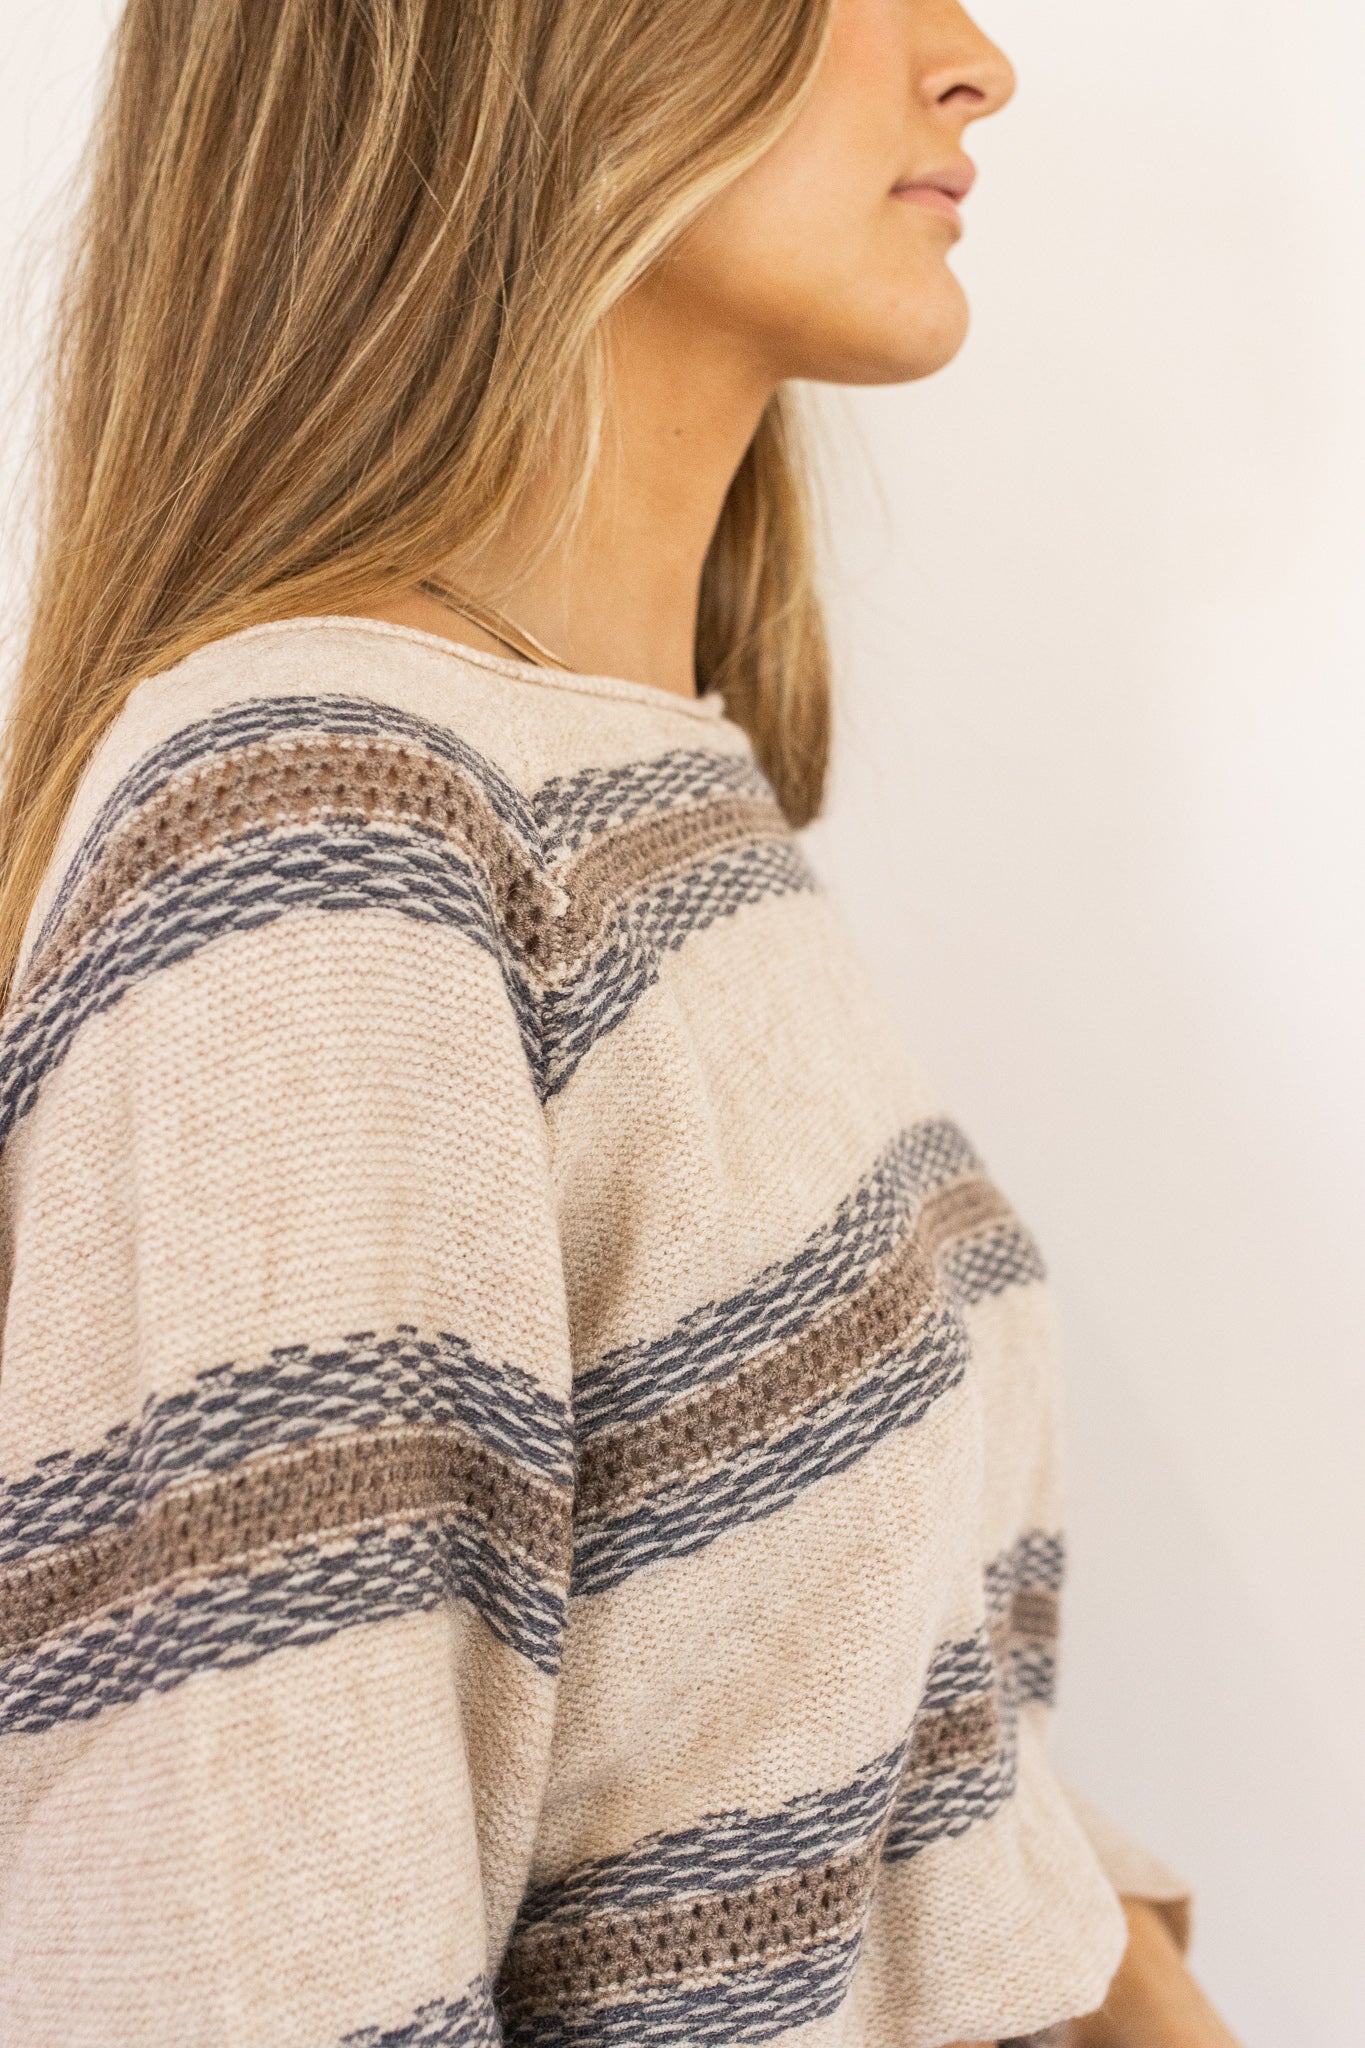 Rachel Green Sweater